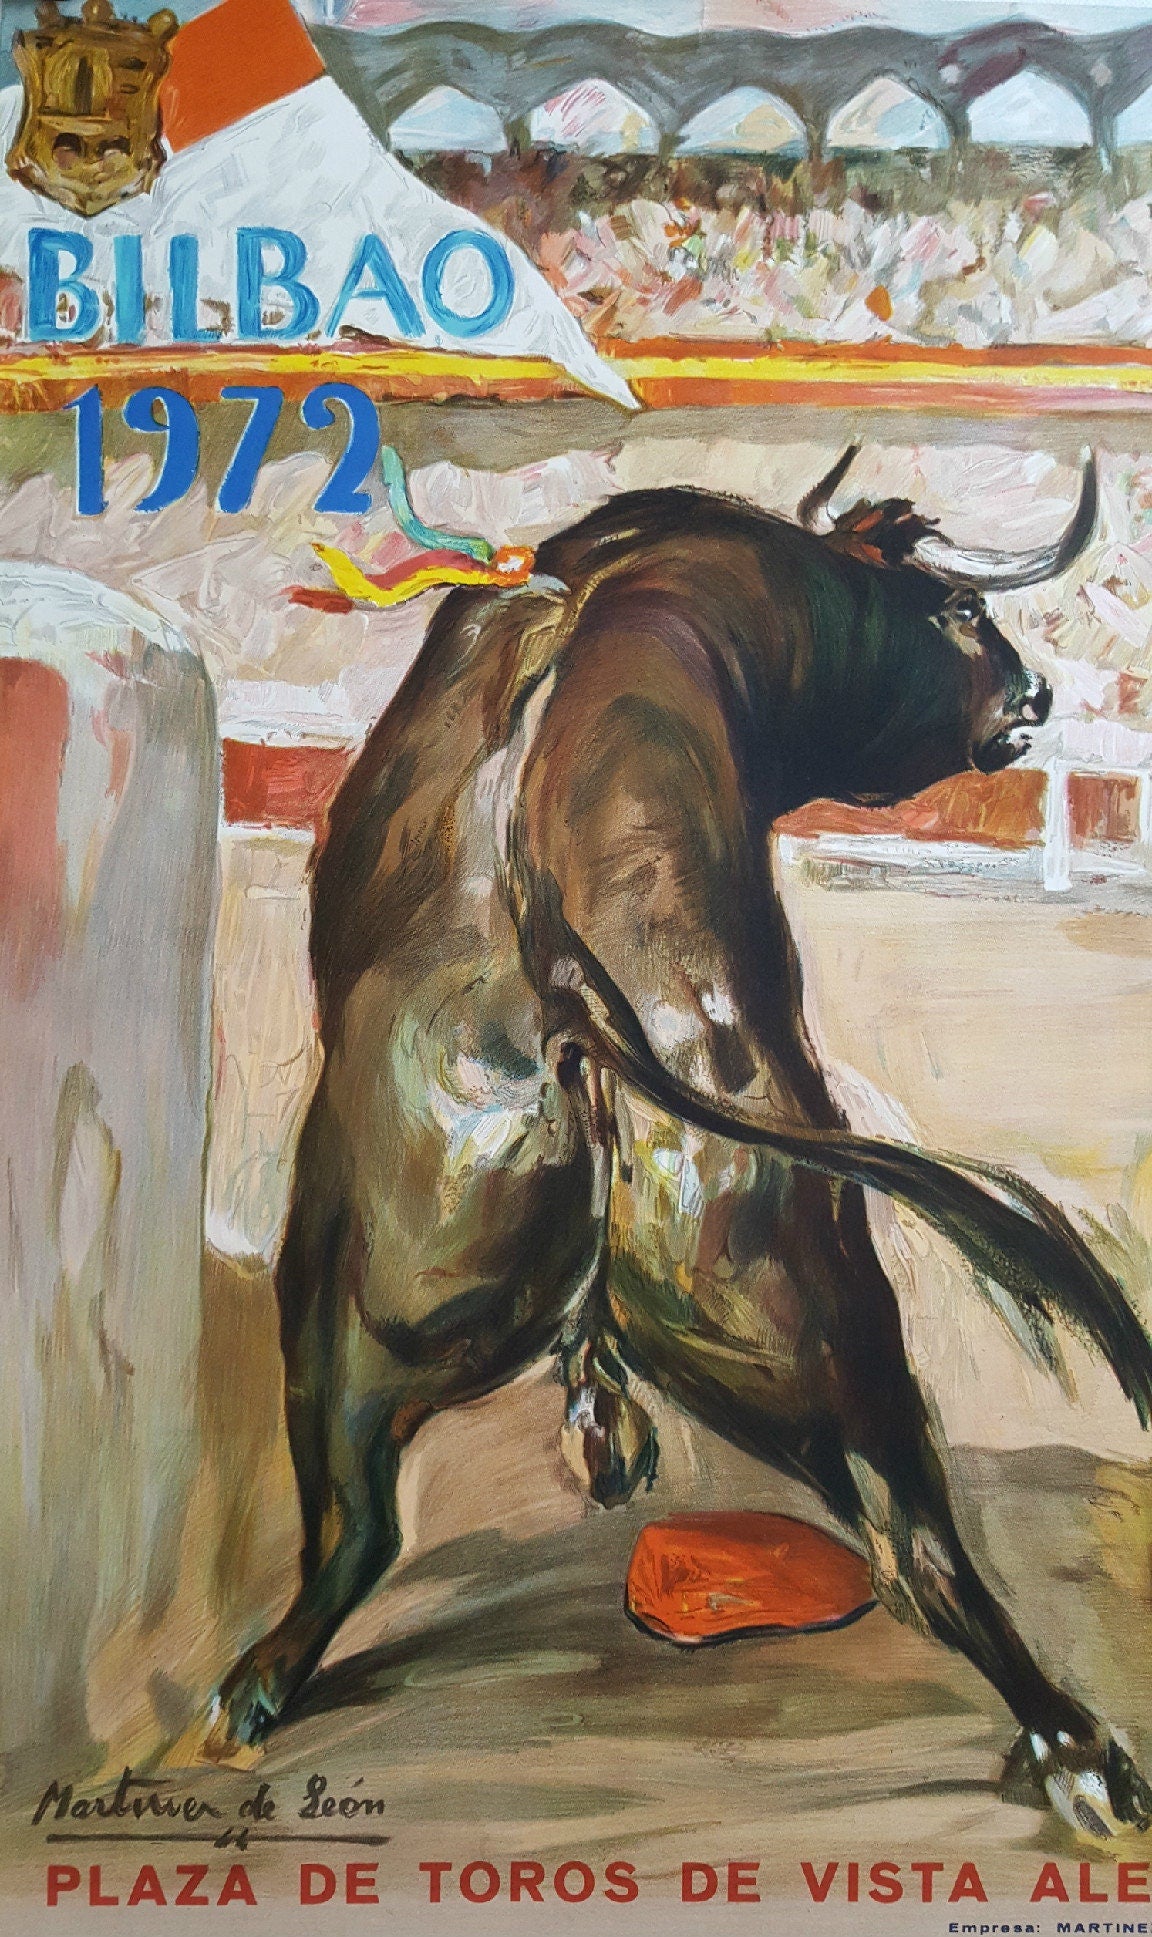 1972 Bullfighting Show in Bilbao Spain - Original Vintage Poster